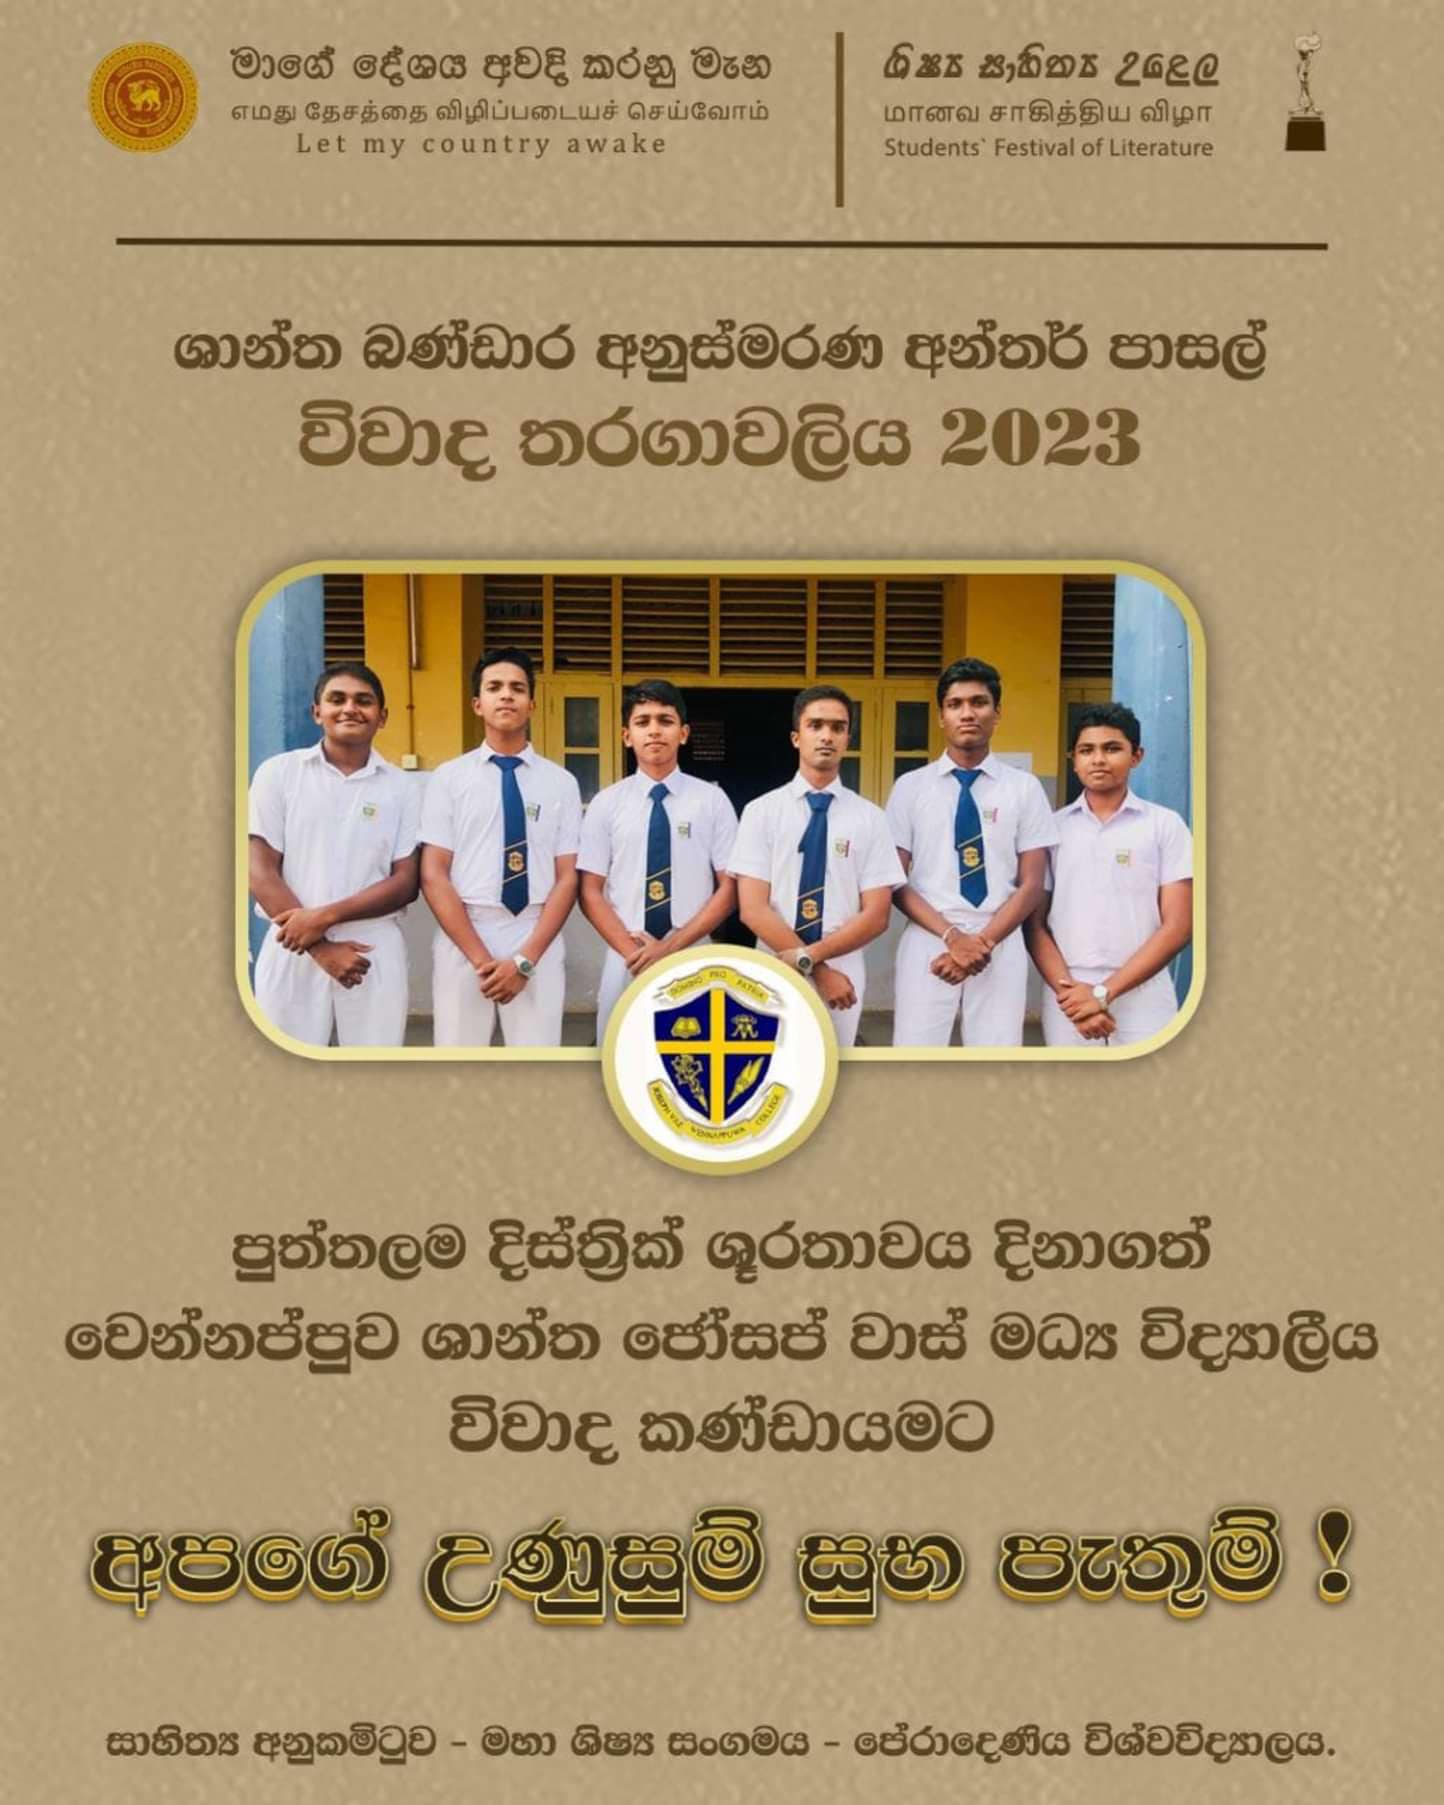 Students Festival Of Literature   University Of Peradeniya - St. Joseph Vaz College - Wennappuwa - Sri Lanka